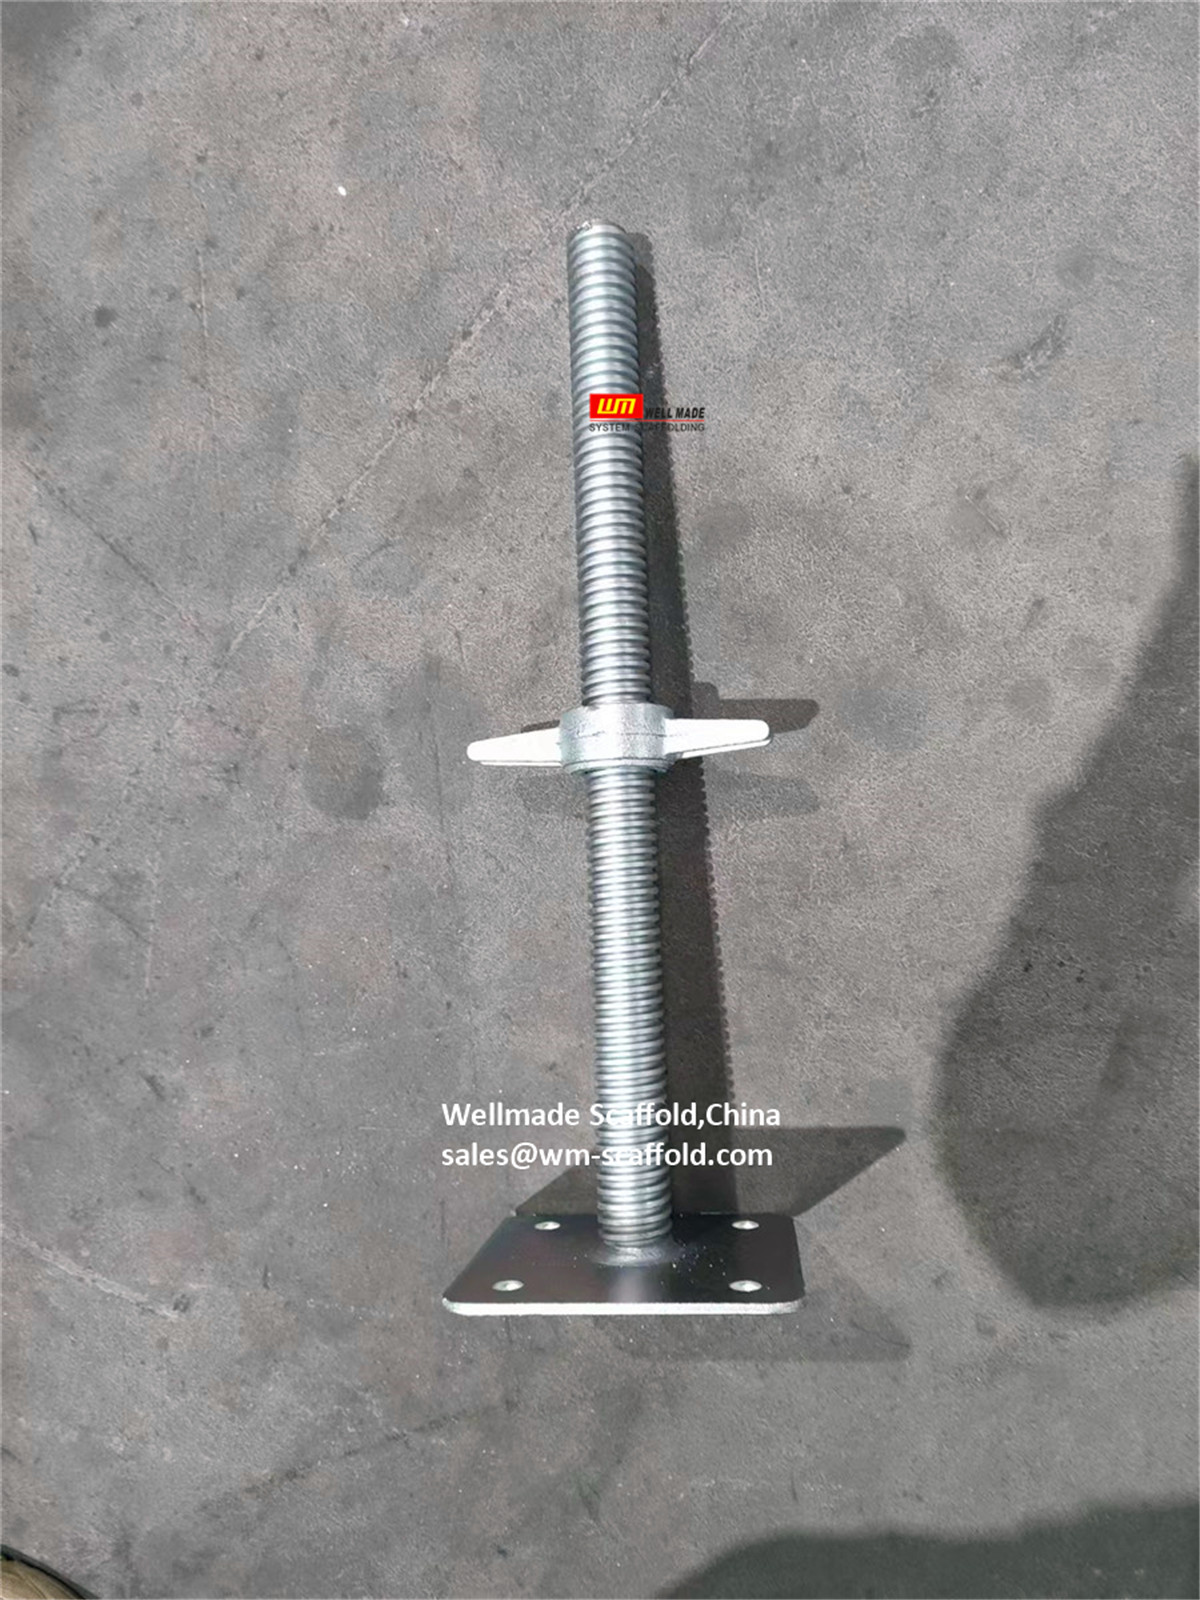 Adjustable Scaffold Screw Jack Base - Construction Scaffolding Leveling Parts - Galvanized Scaffolding Jacks